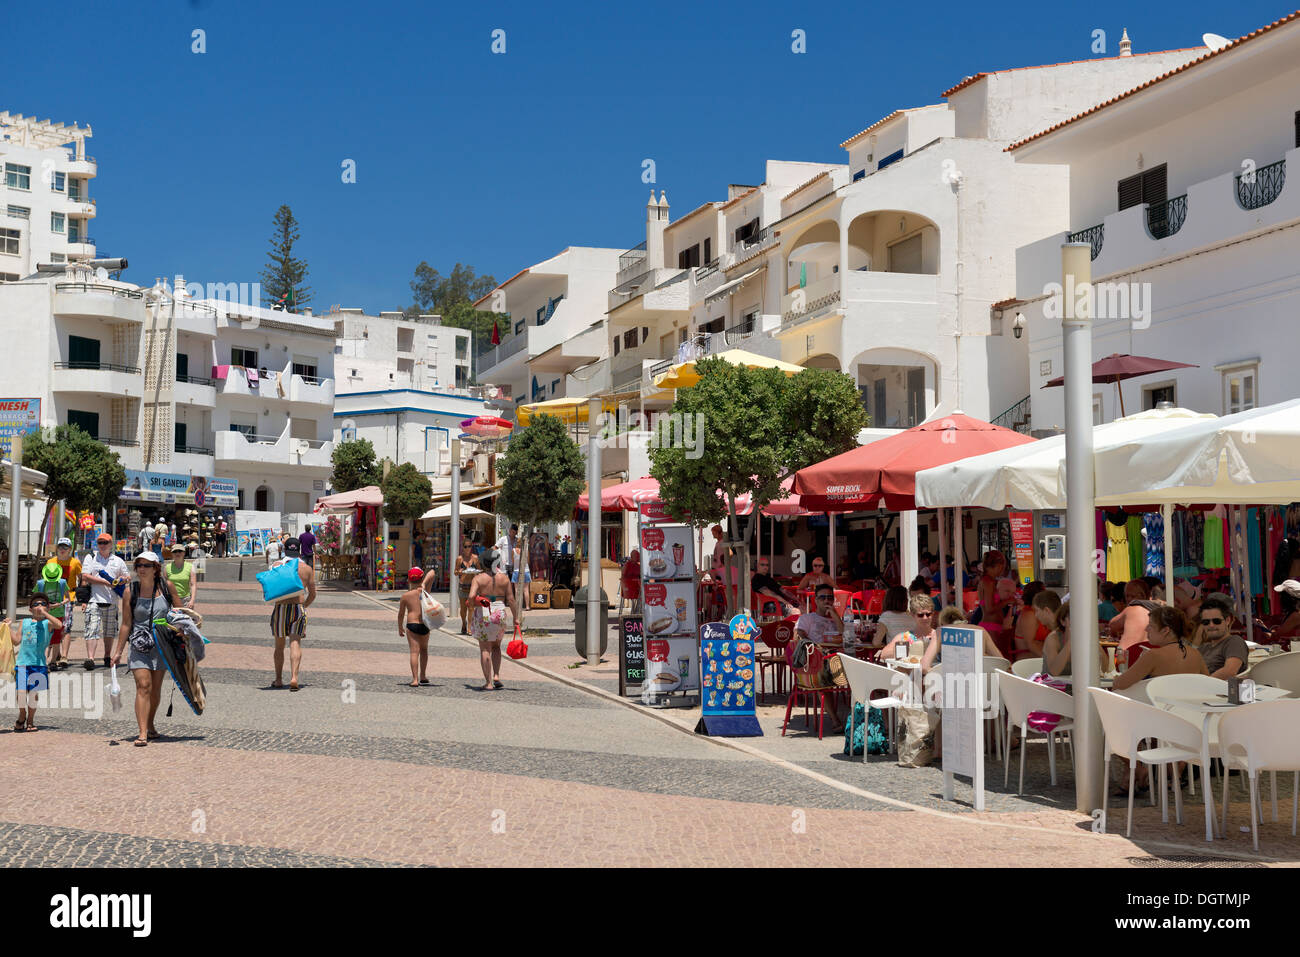 Portugal, the Algarve, Olhos d'Água street and restaurants Stock Photo